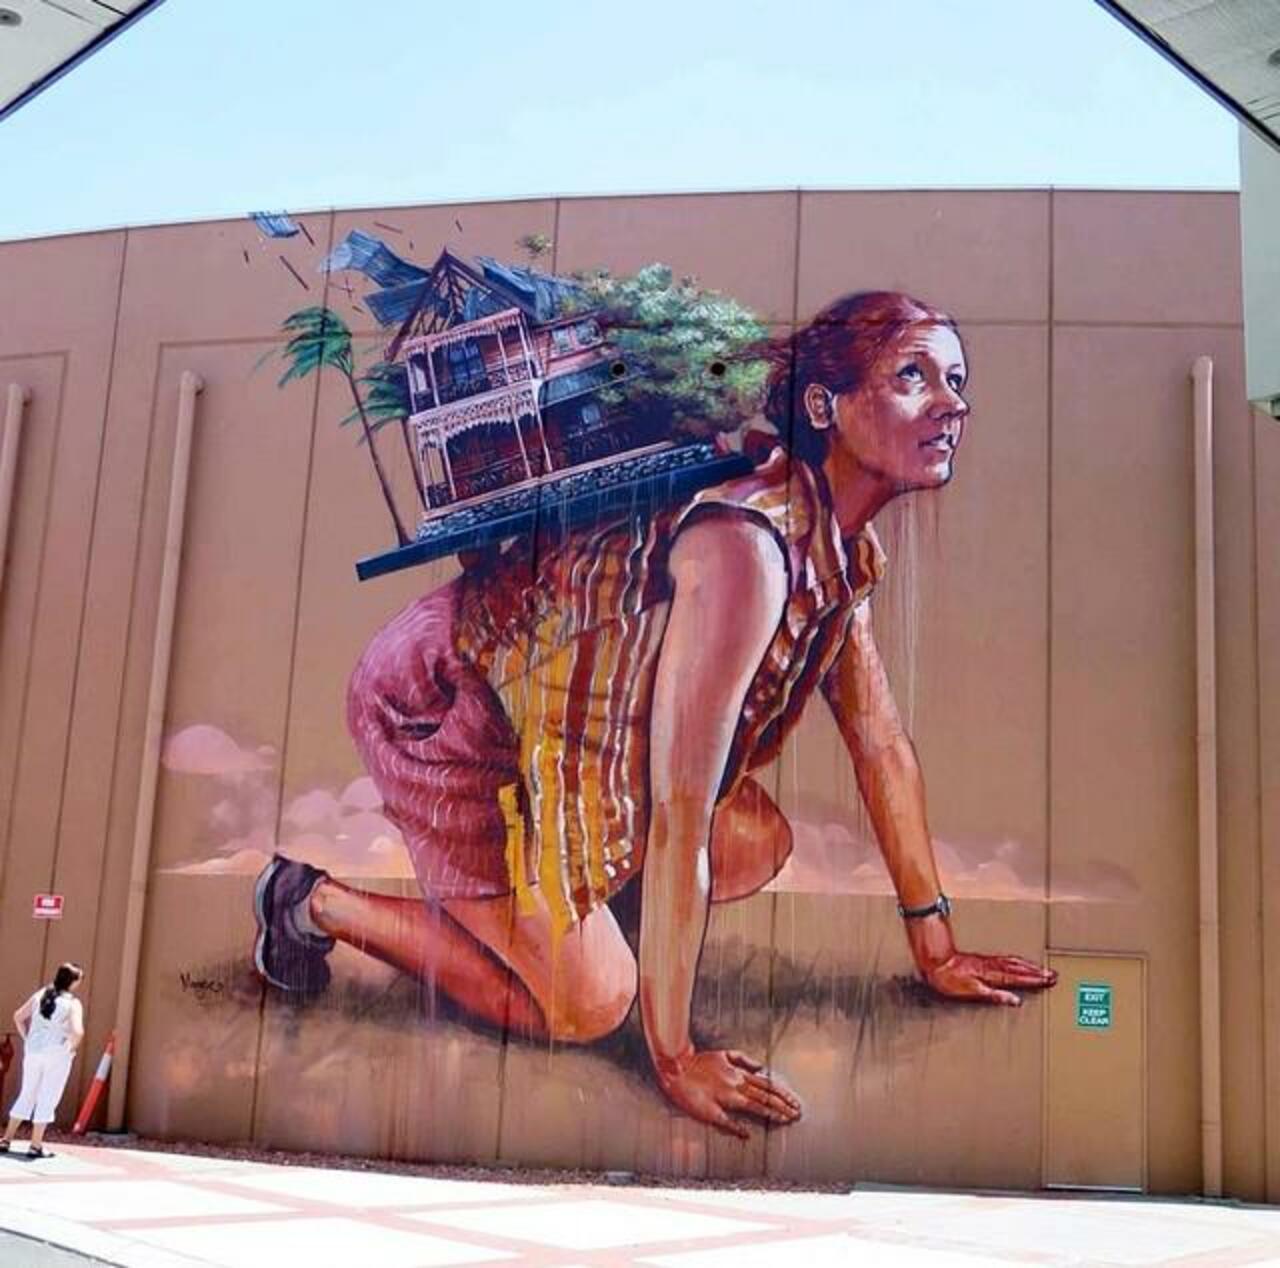 Latest Fintan Magee massive Street Art piece in Bunbury, Western Australia 

#art #graffiti #mural #streetart http://t.co/OByzSl0OaS